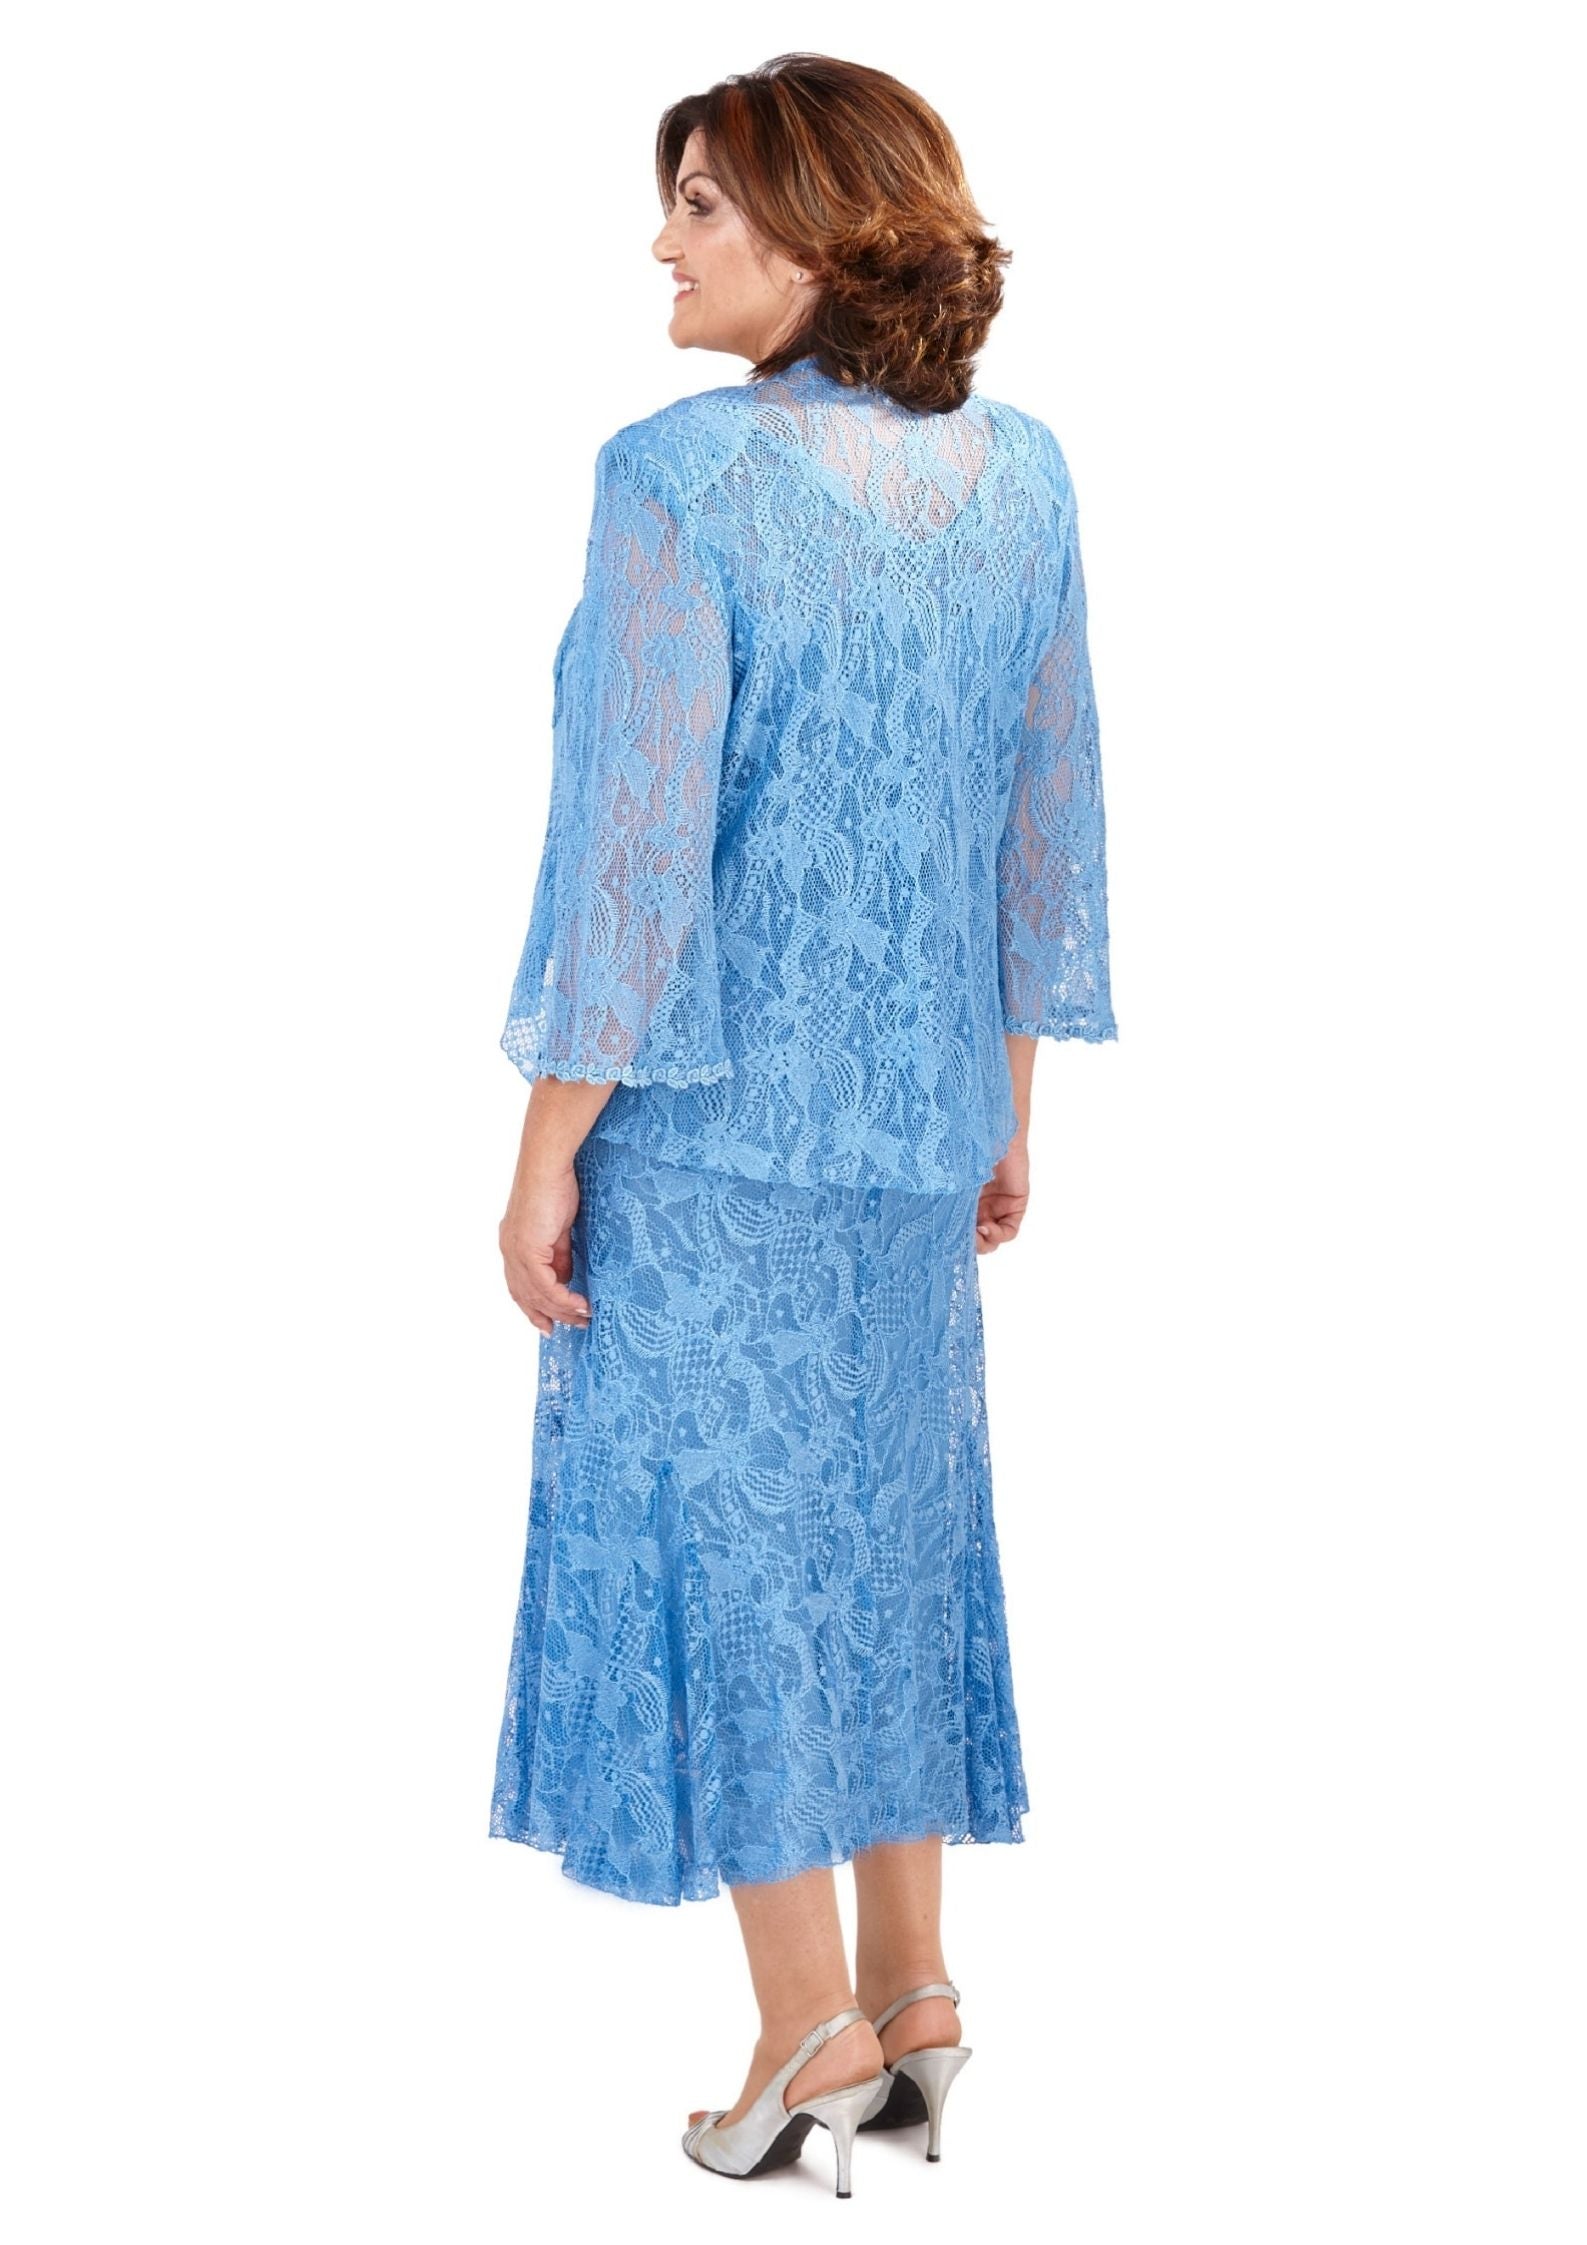 Ann Balon Collection - Skirt, Top & Jacket - Aurora - Ever Elegant